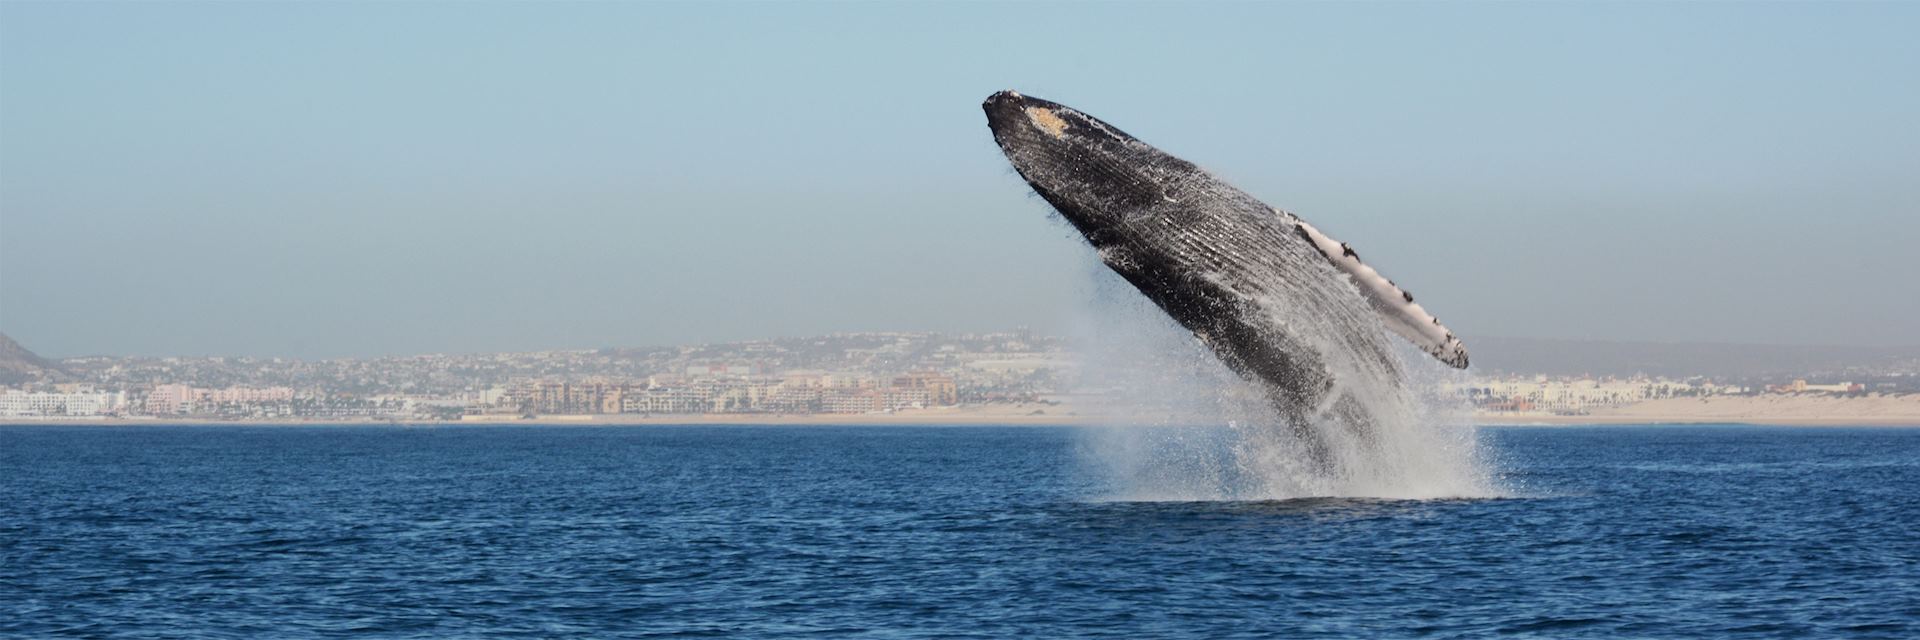 Whale breaching, Baja California, Mexico